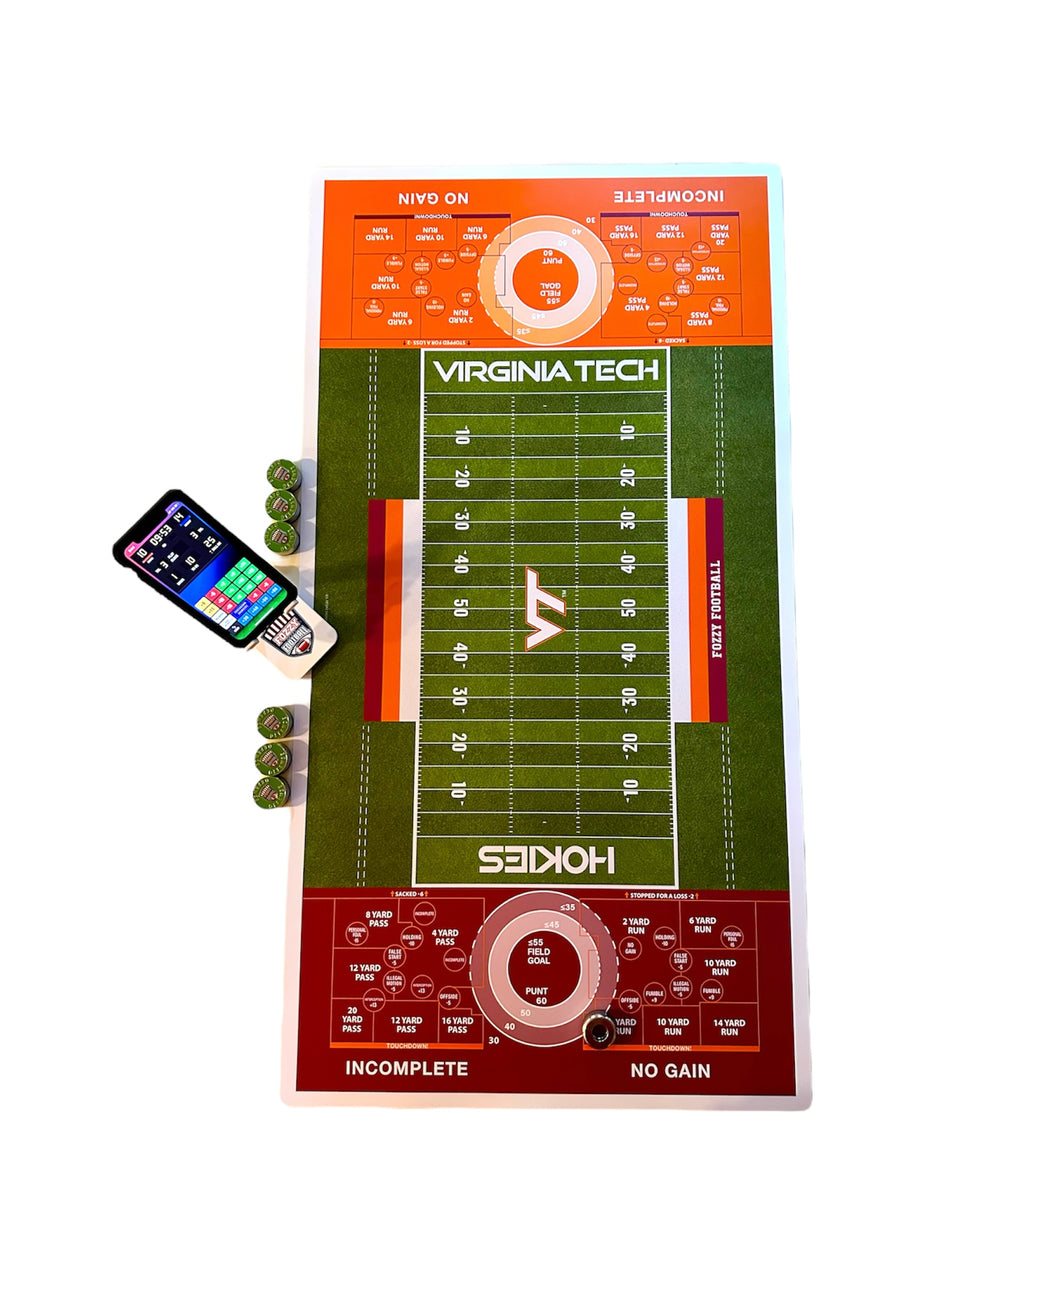 Virginia Tech Hokies custom Fozzy Football game mat